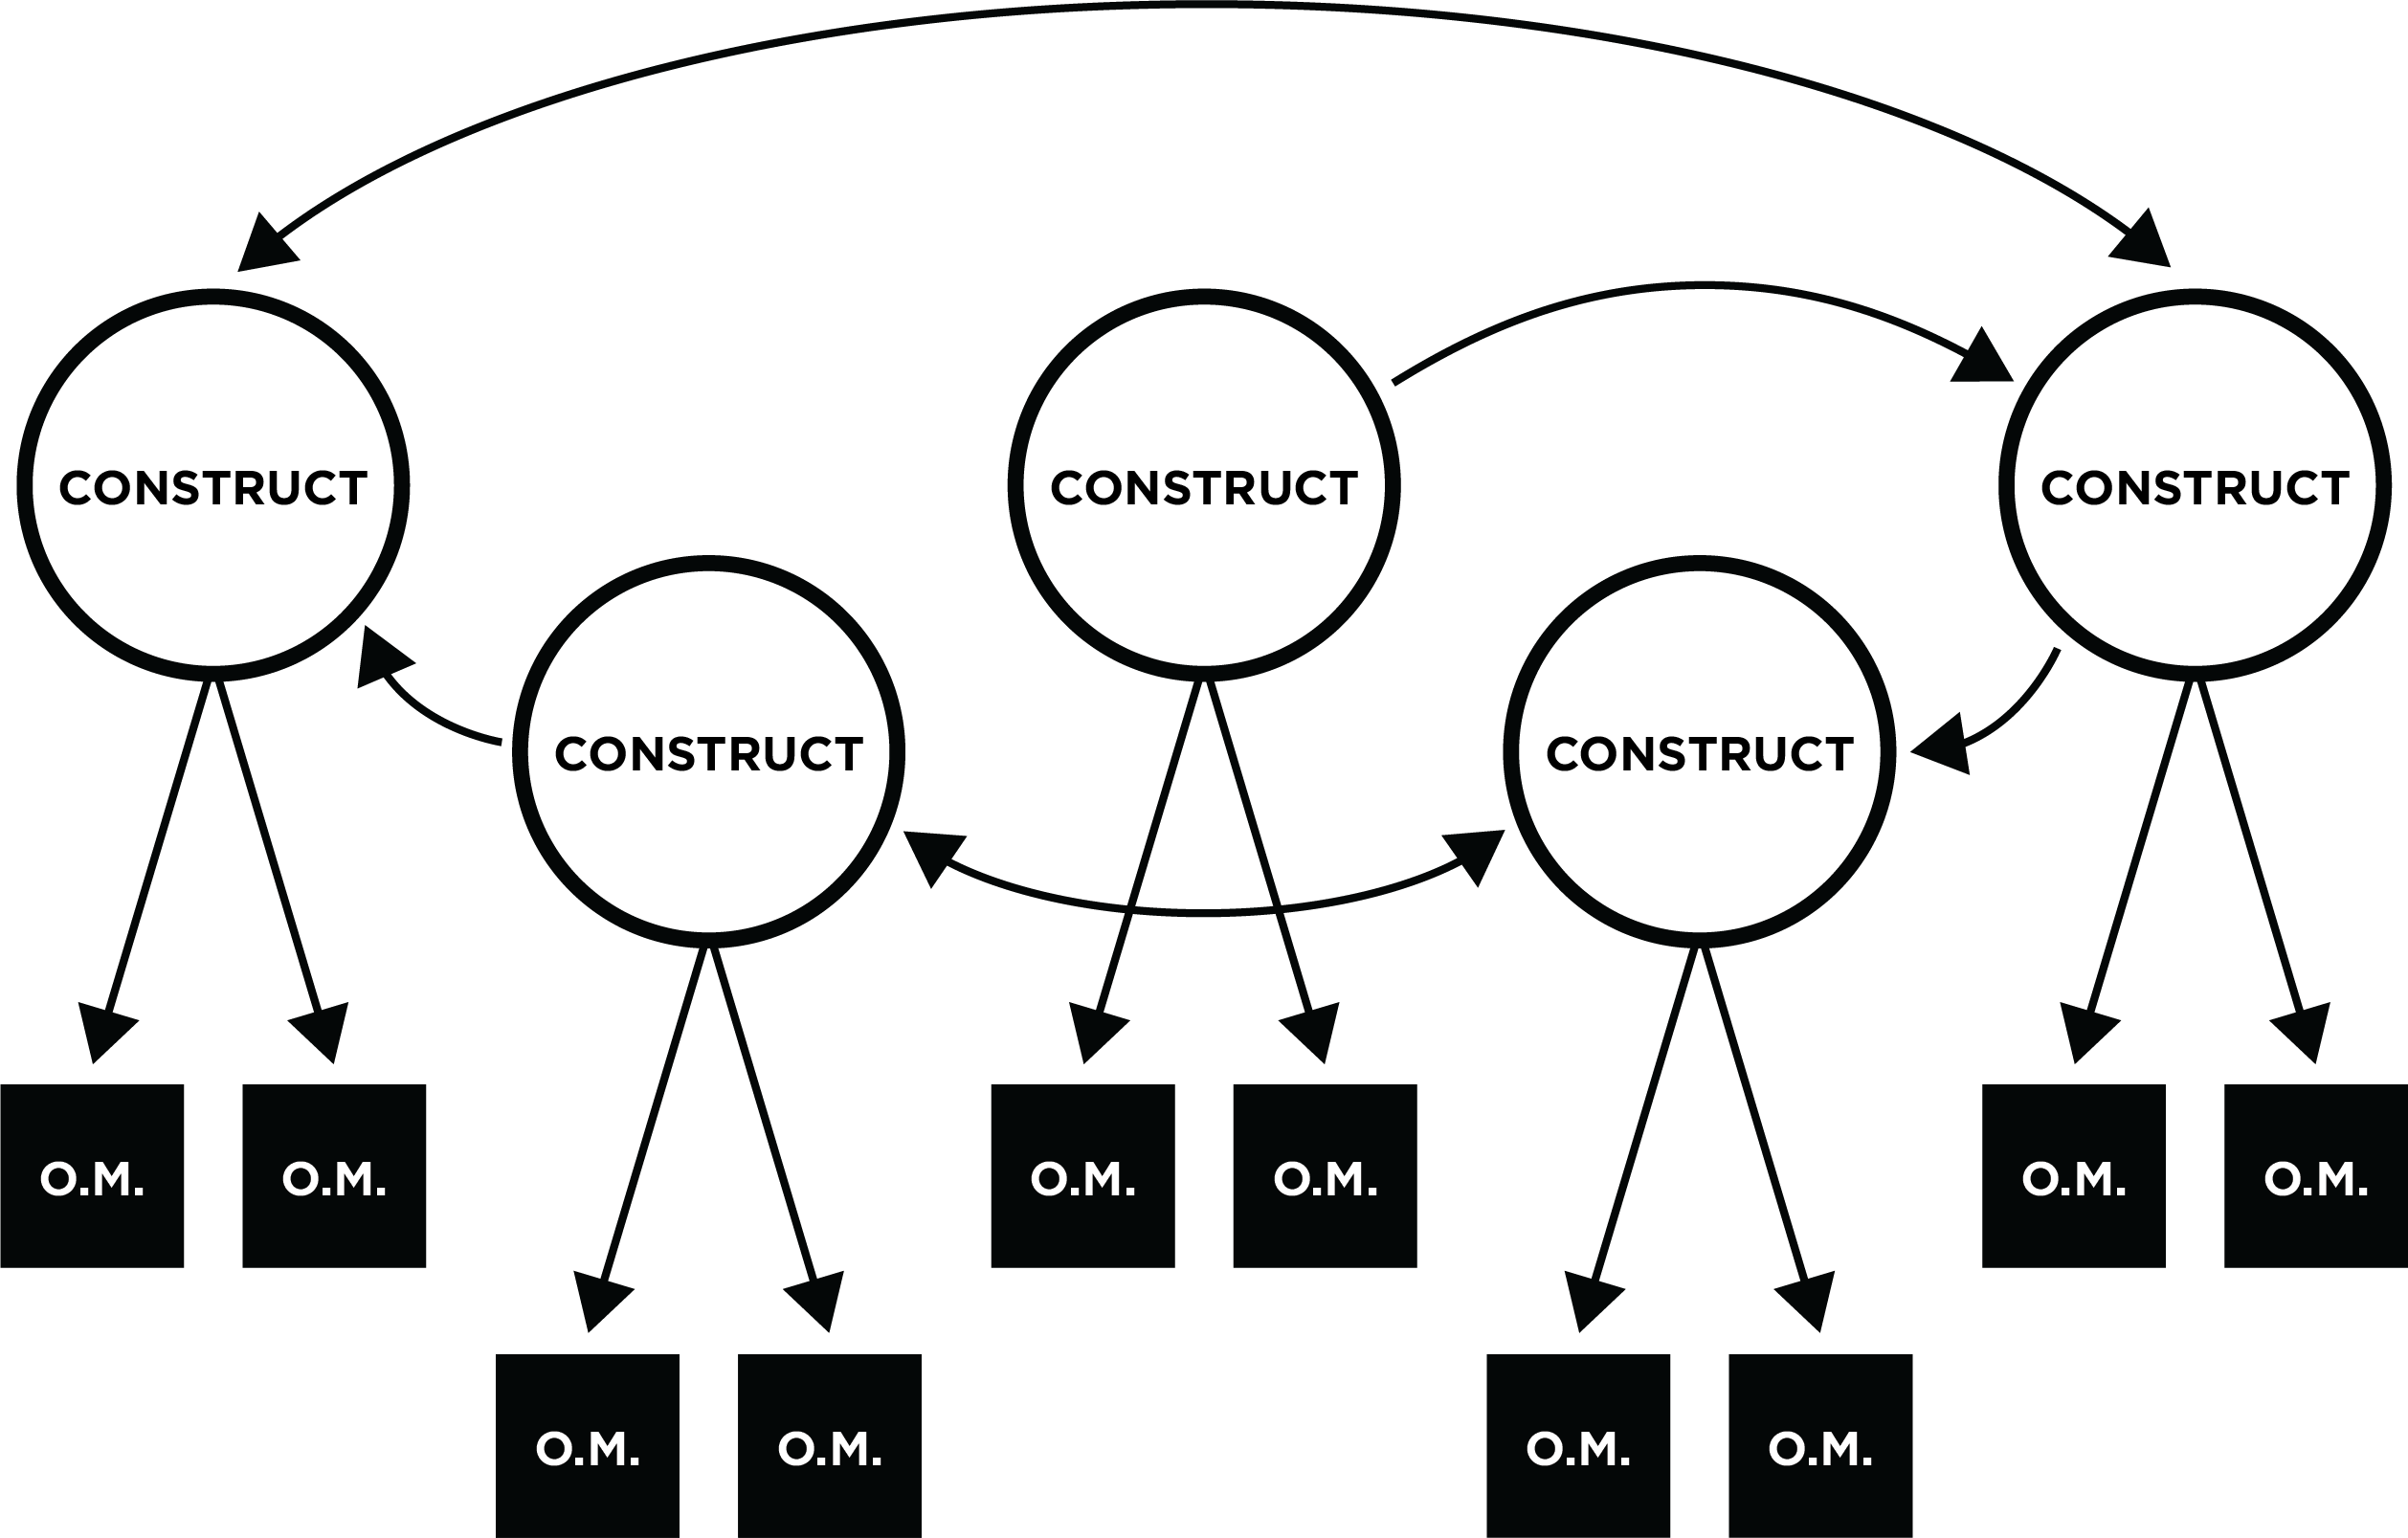 Example of a Nomological Network. O.M. = Observable Manifestation.